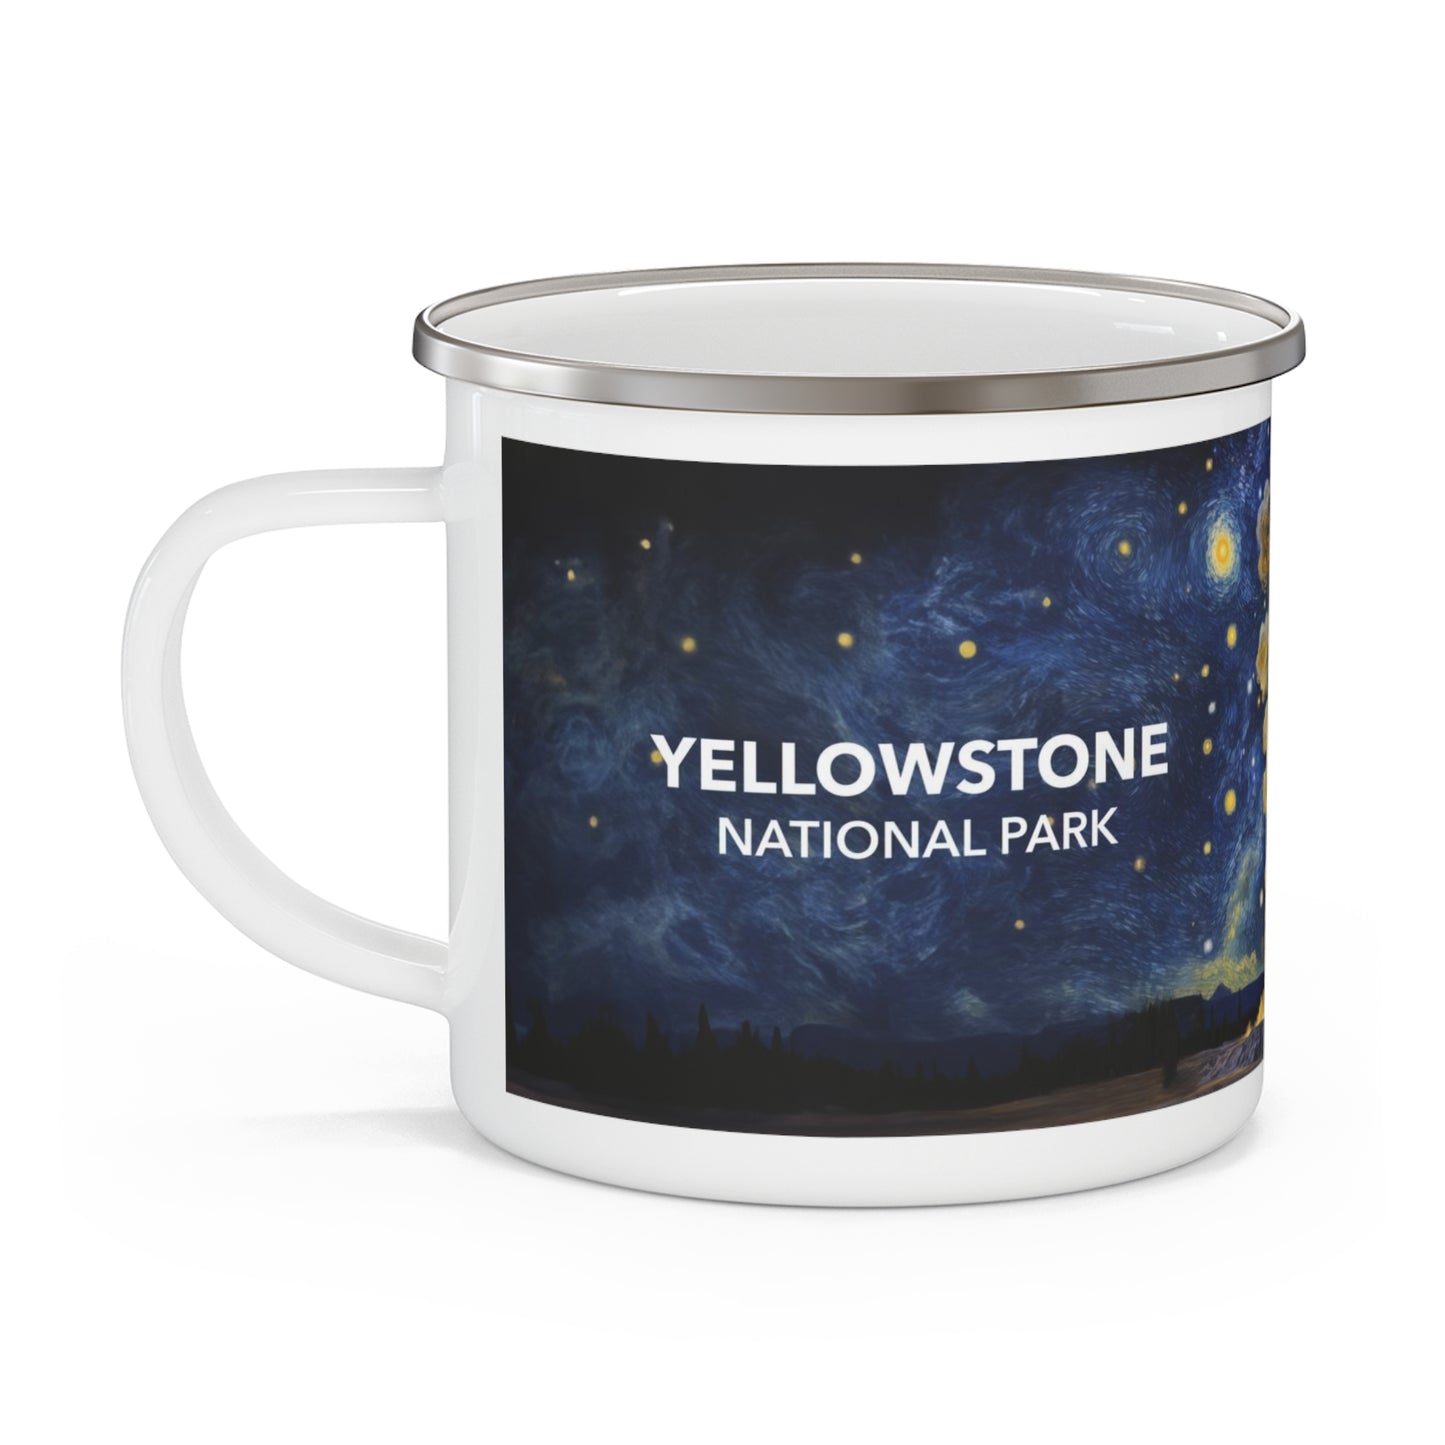 Yellowstone National Park Camping Mug - Old Faithful Starry Night